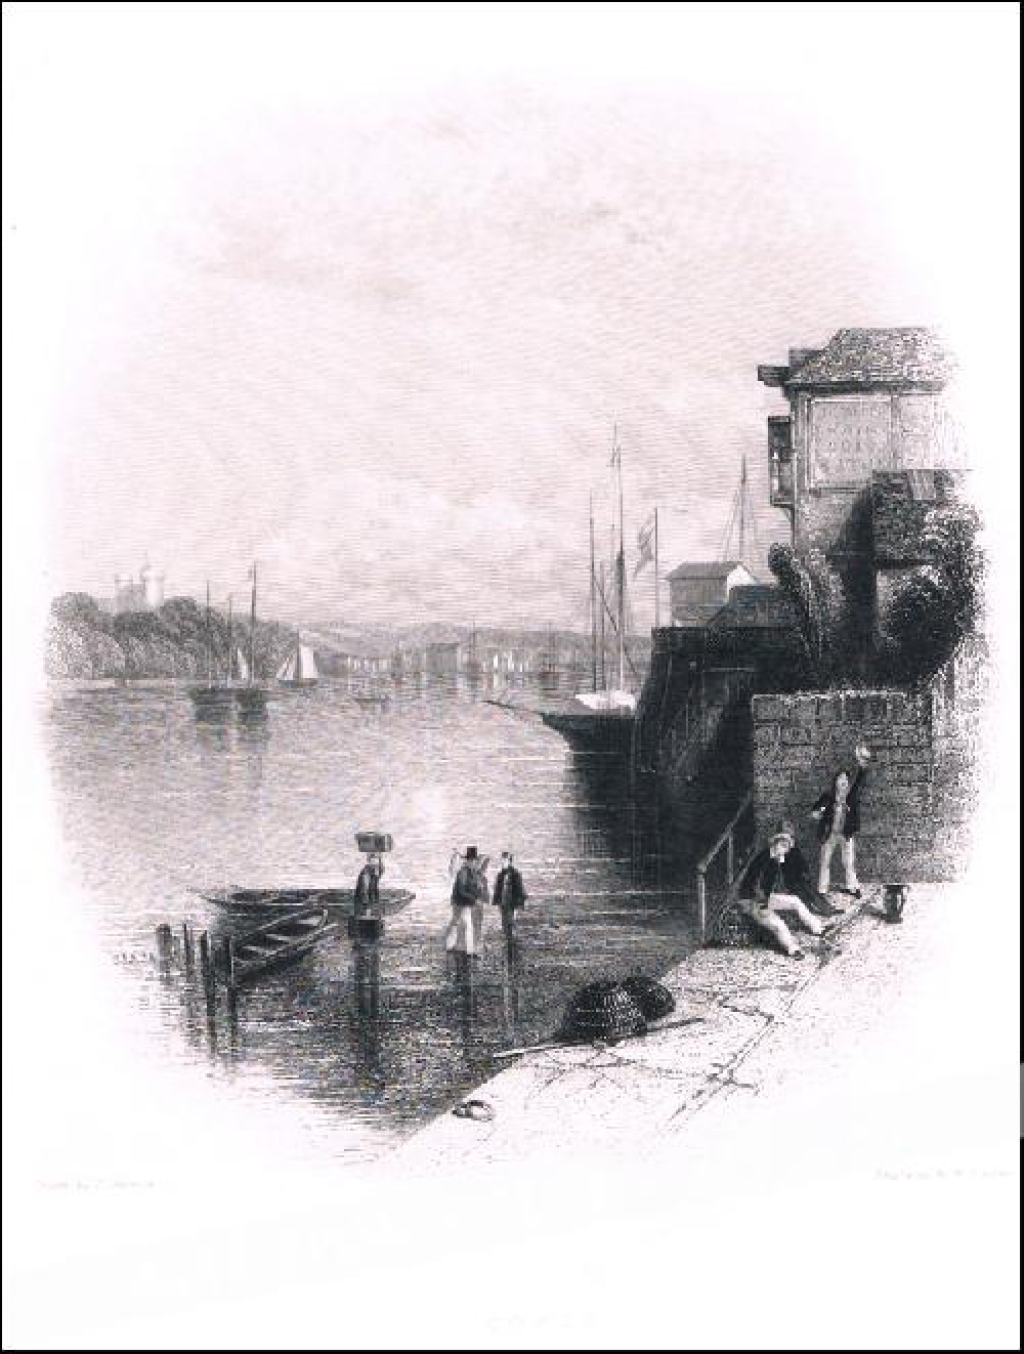 [rycina, ok. 1840] Cowes. Hampshire [English seaport on the Isle of Wight]